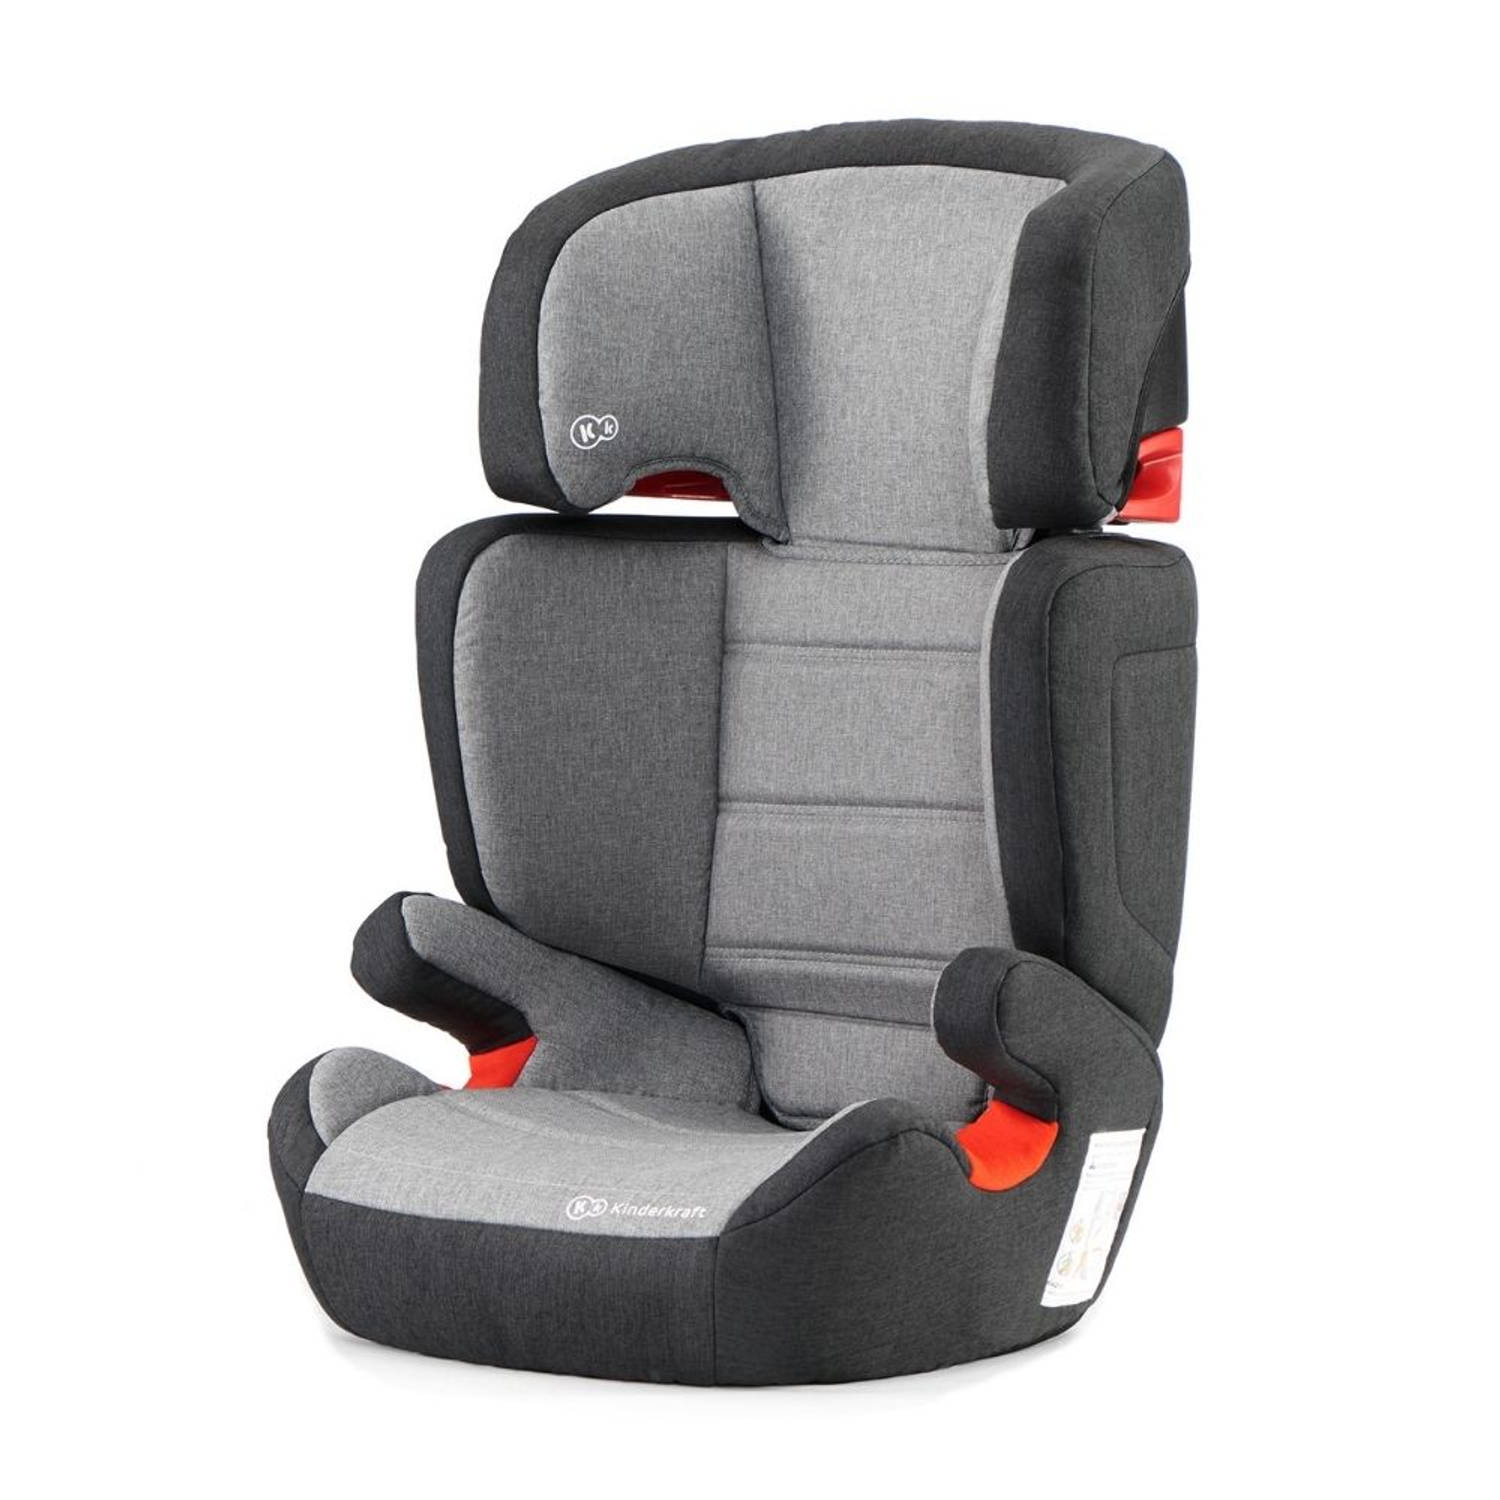 Kinderkraft - Autostoel - Junior Fix - 42 x 82 x 40 cm - 4kg - Zwart/Grijs - Side Protection